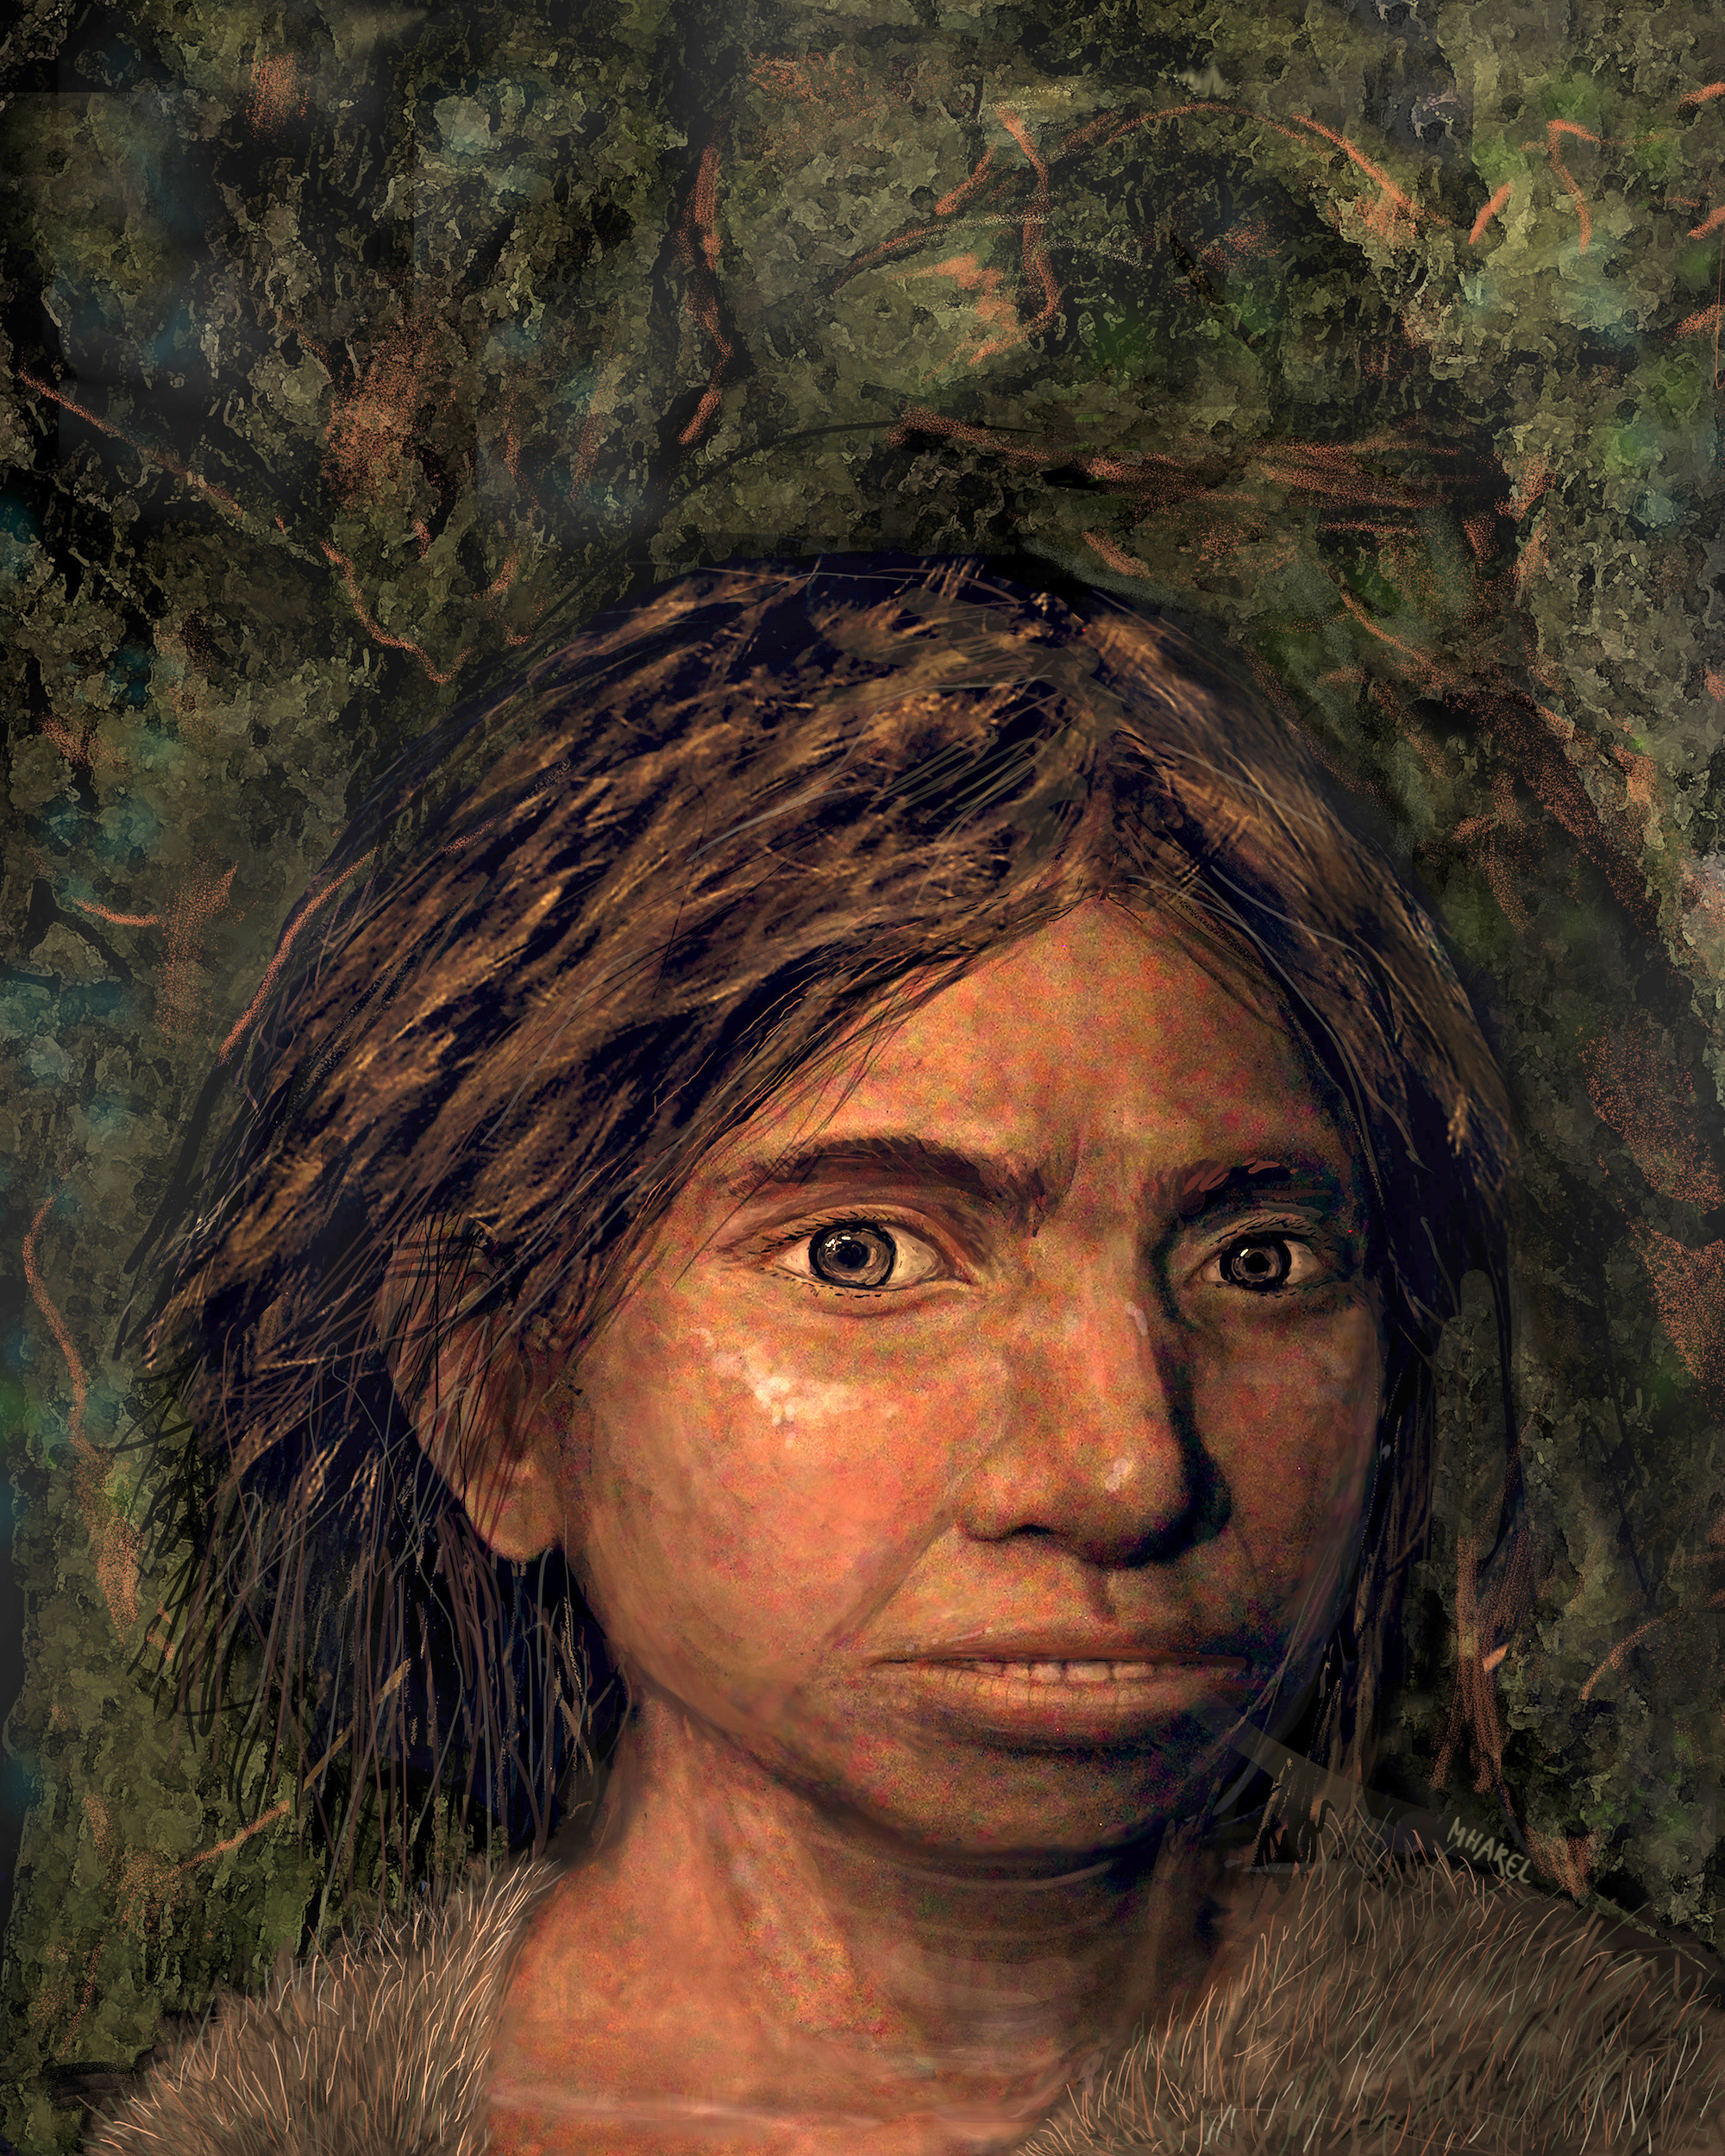 neanderthal woman russian